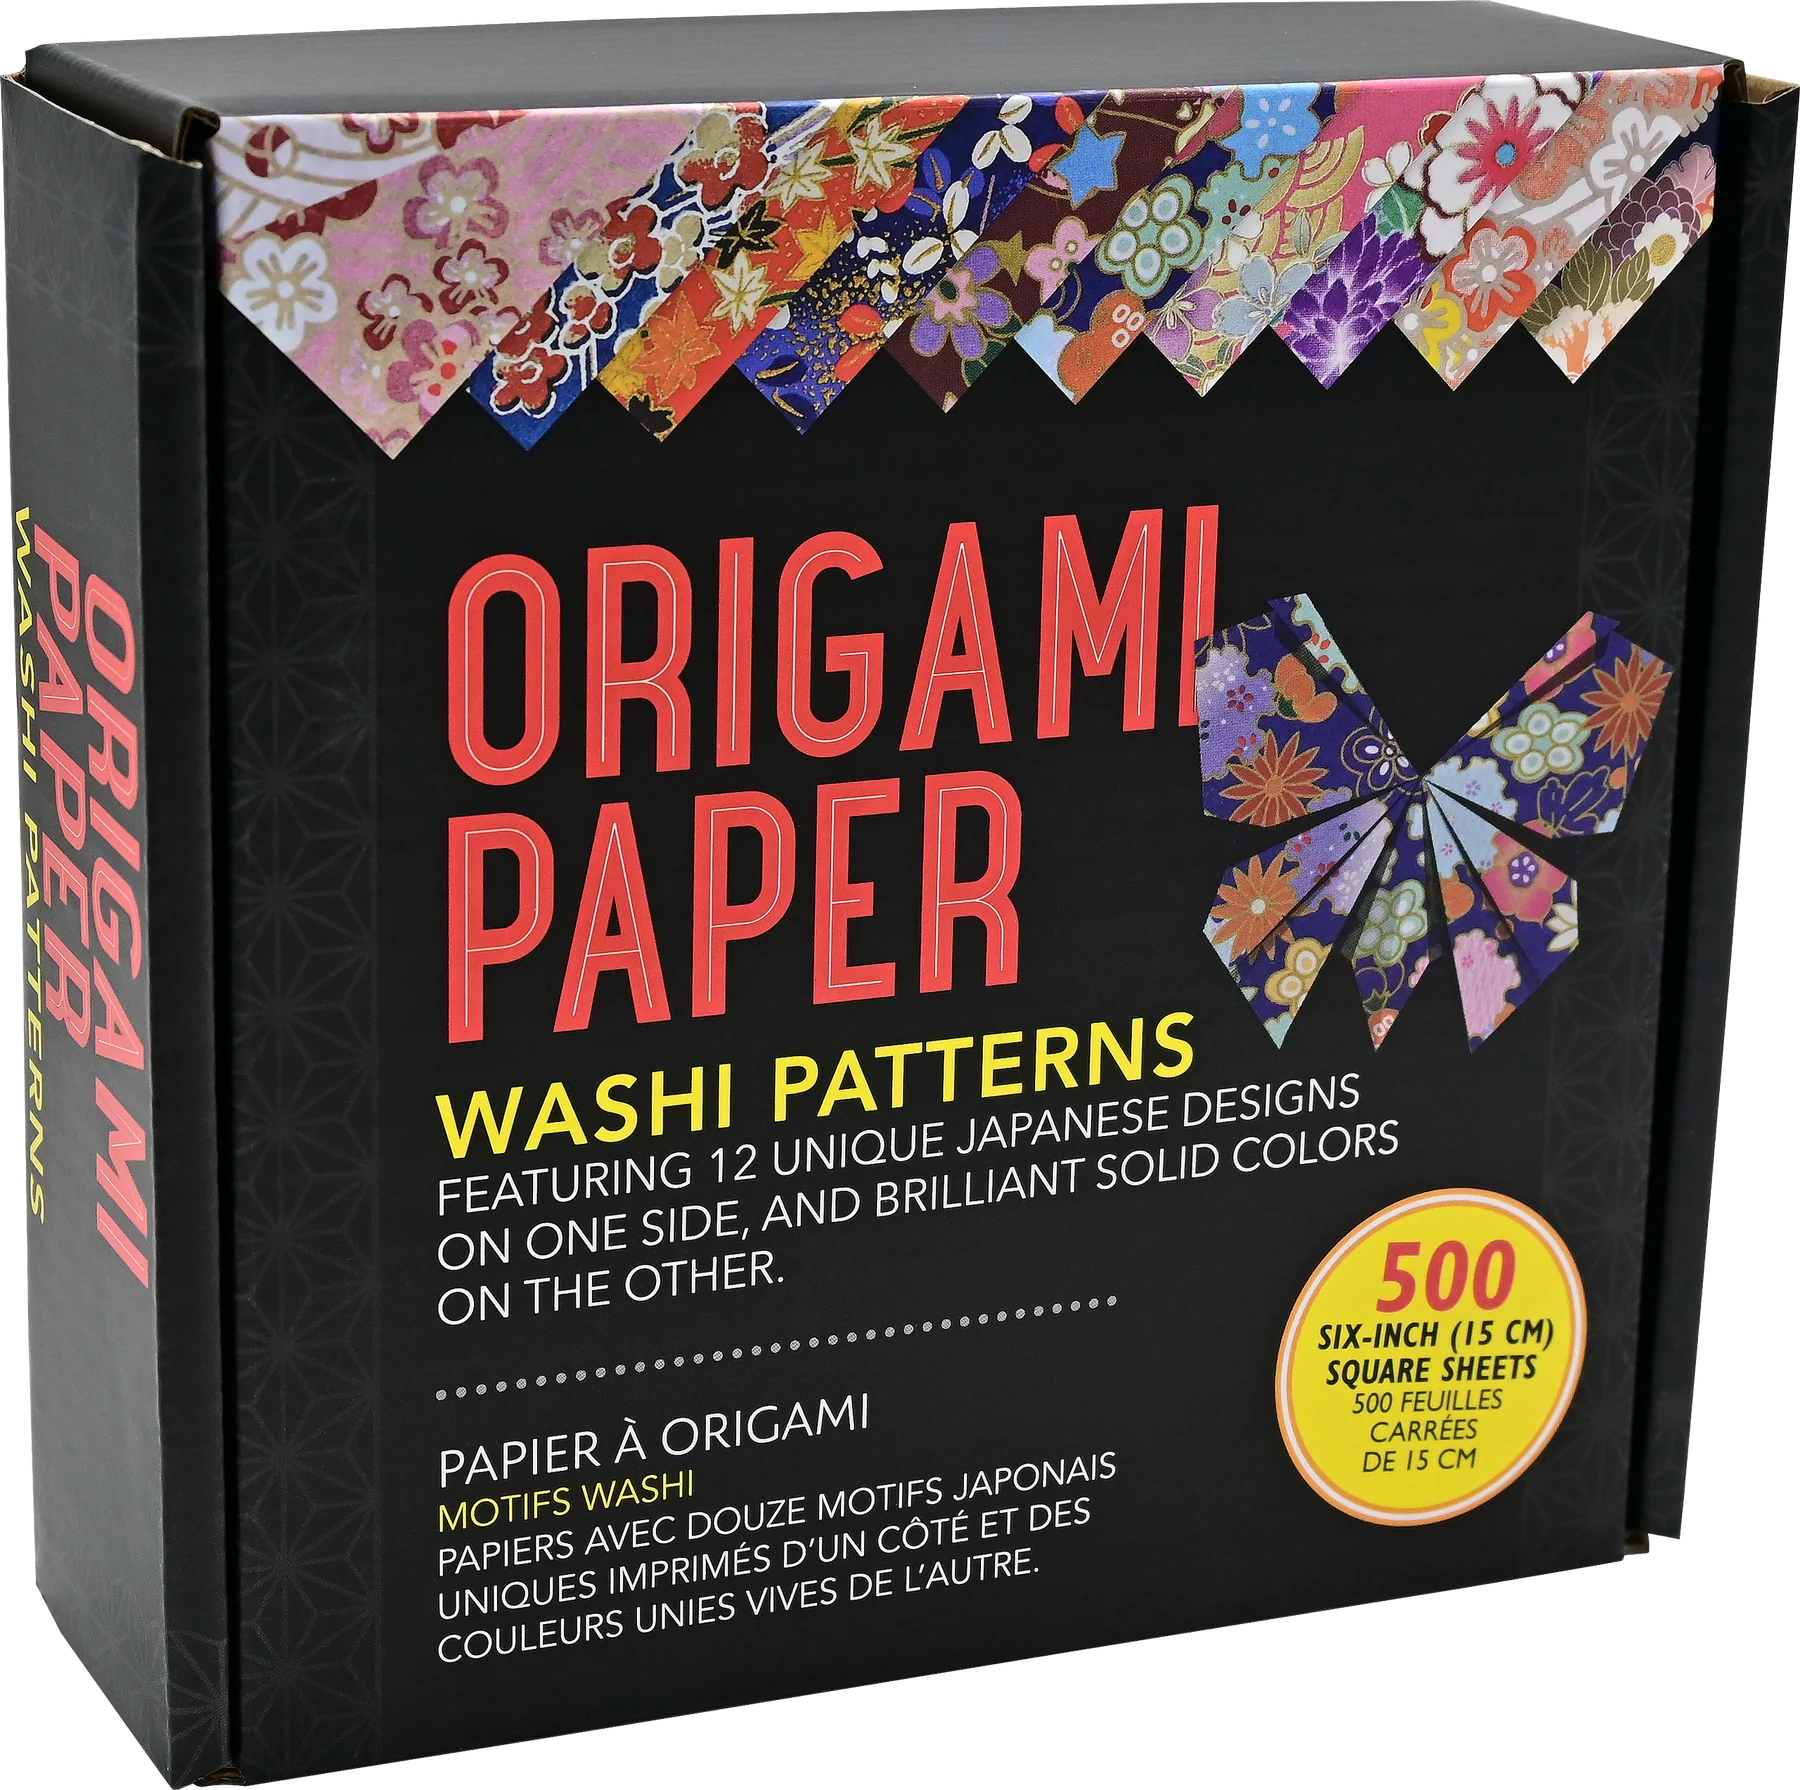 Origami Paper Washi Patterns